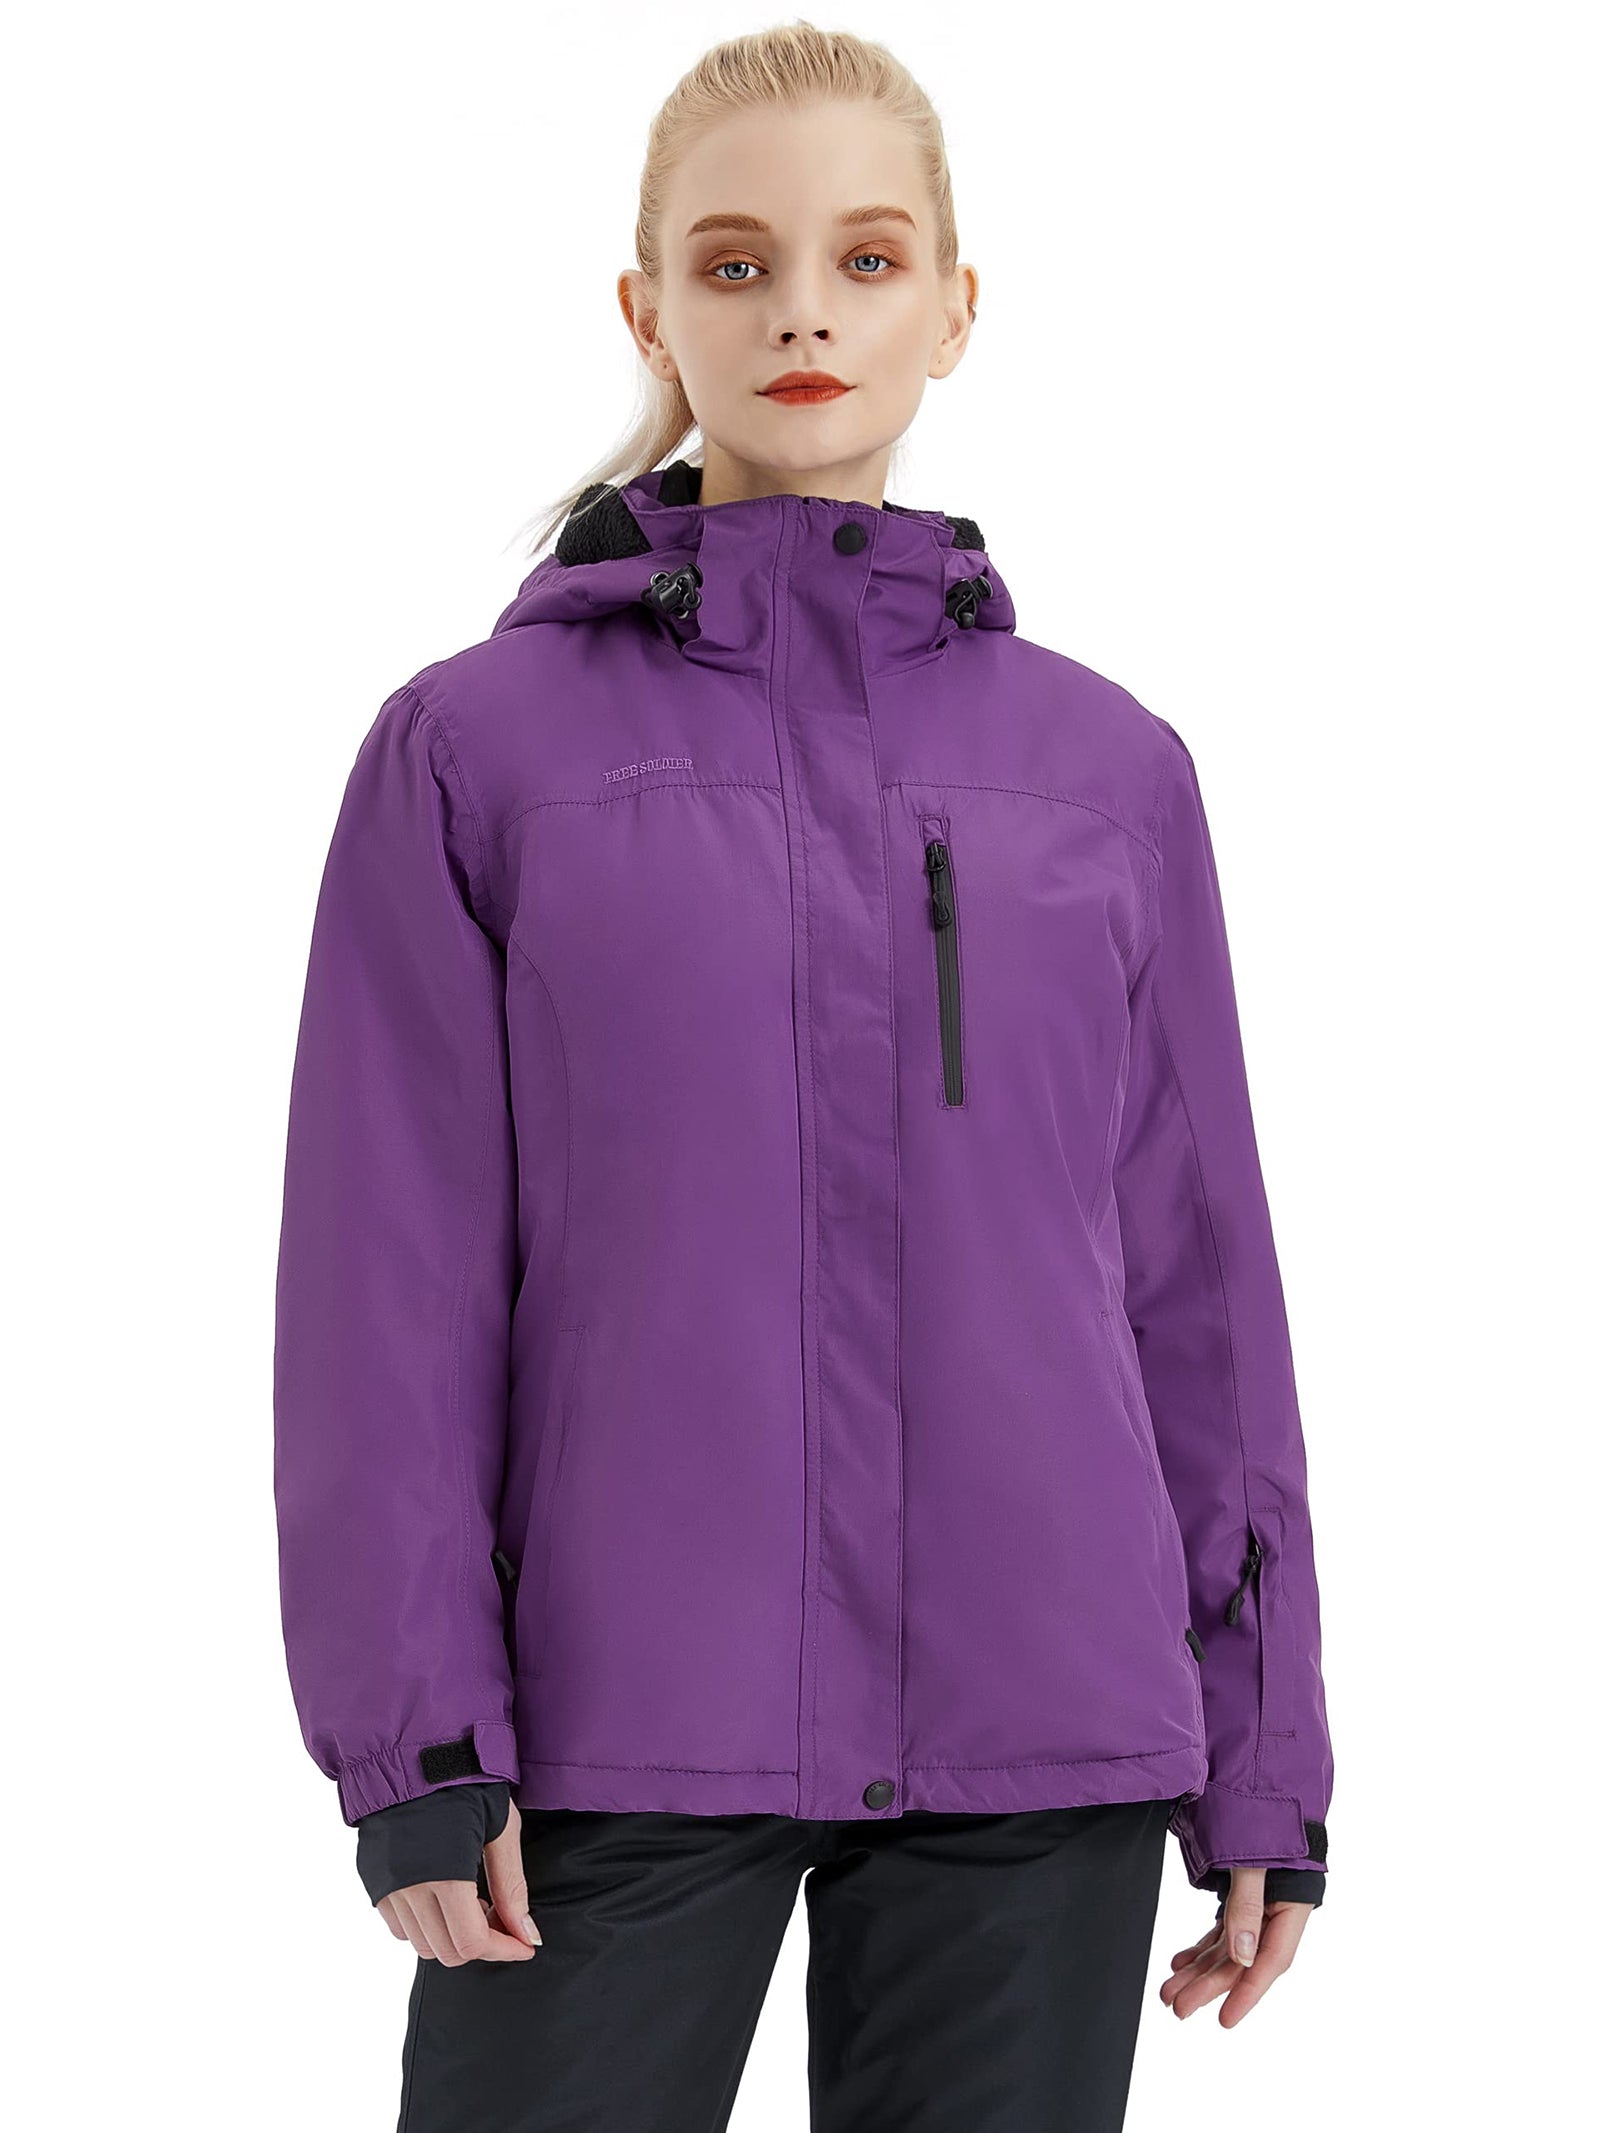 Women's Snow pants Hiking ski Waterproof Fleece Lined Outdoor Cargo Pants  Softshell Winter Warm Pants with Zipper Pockets,H4409,Army,18